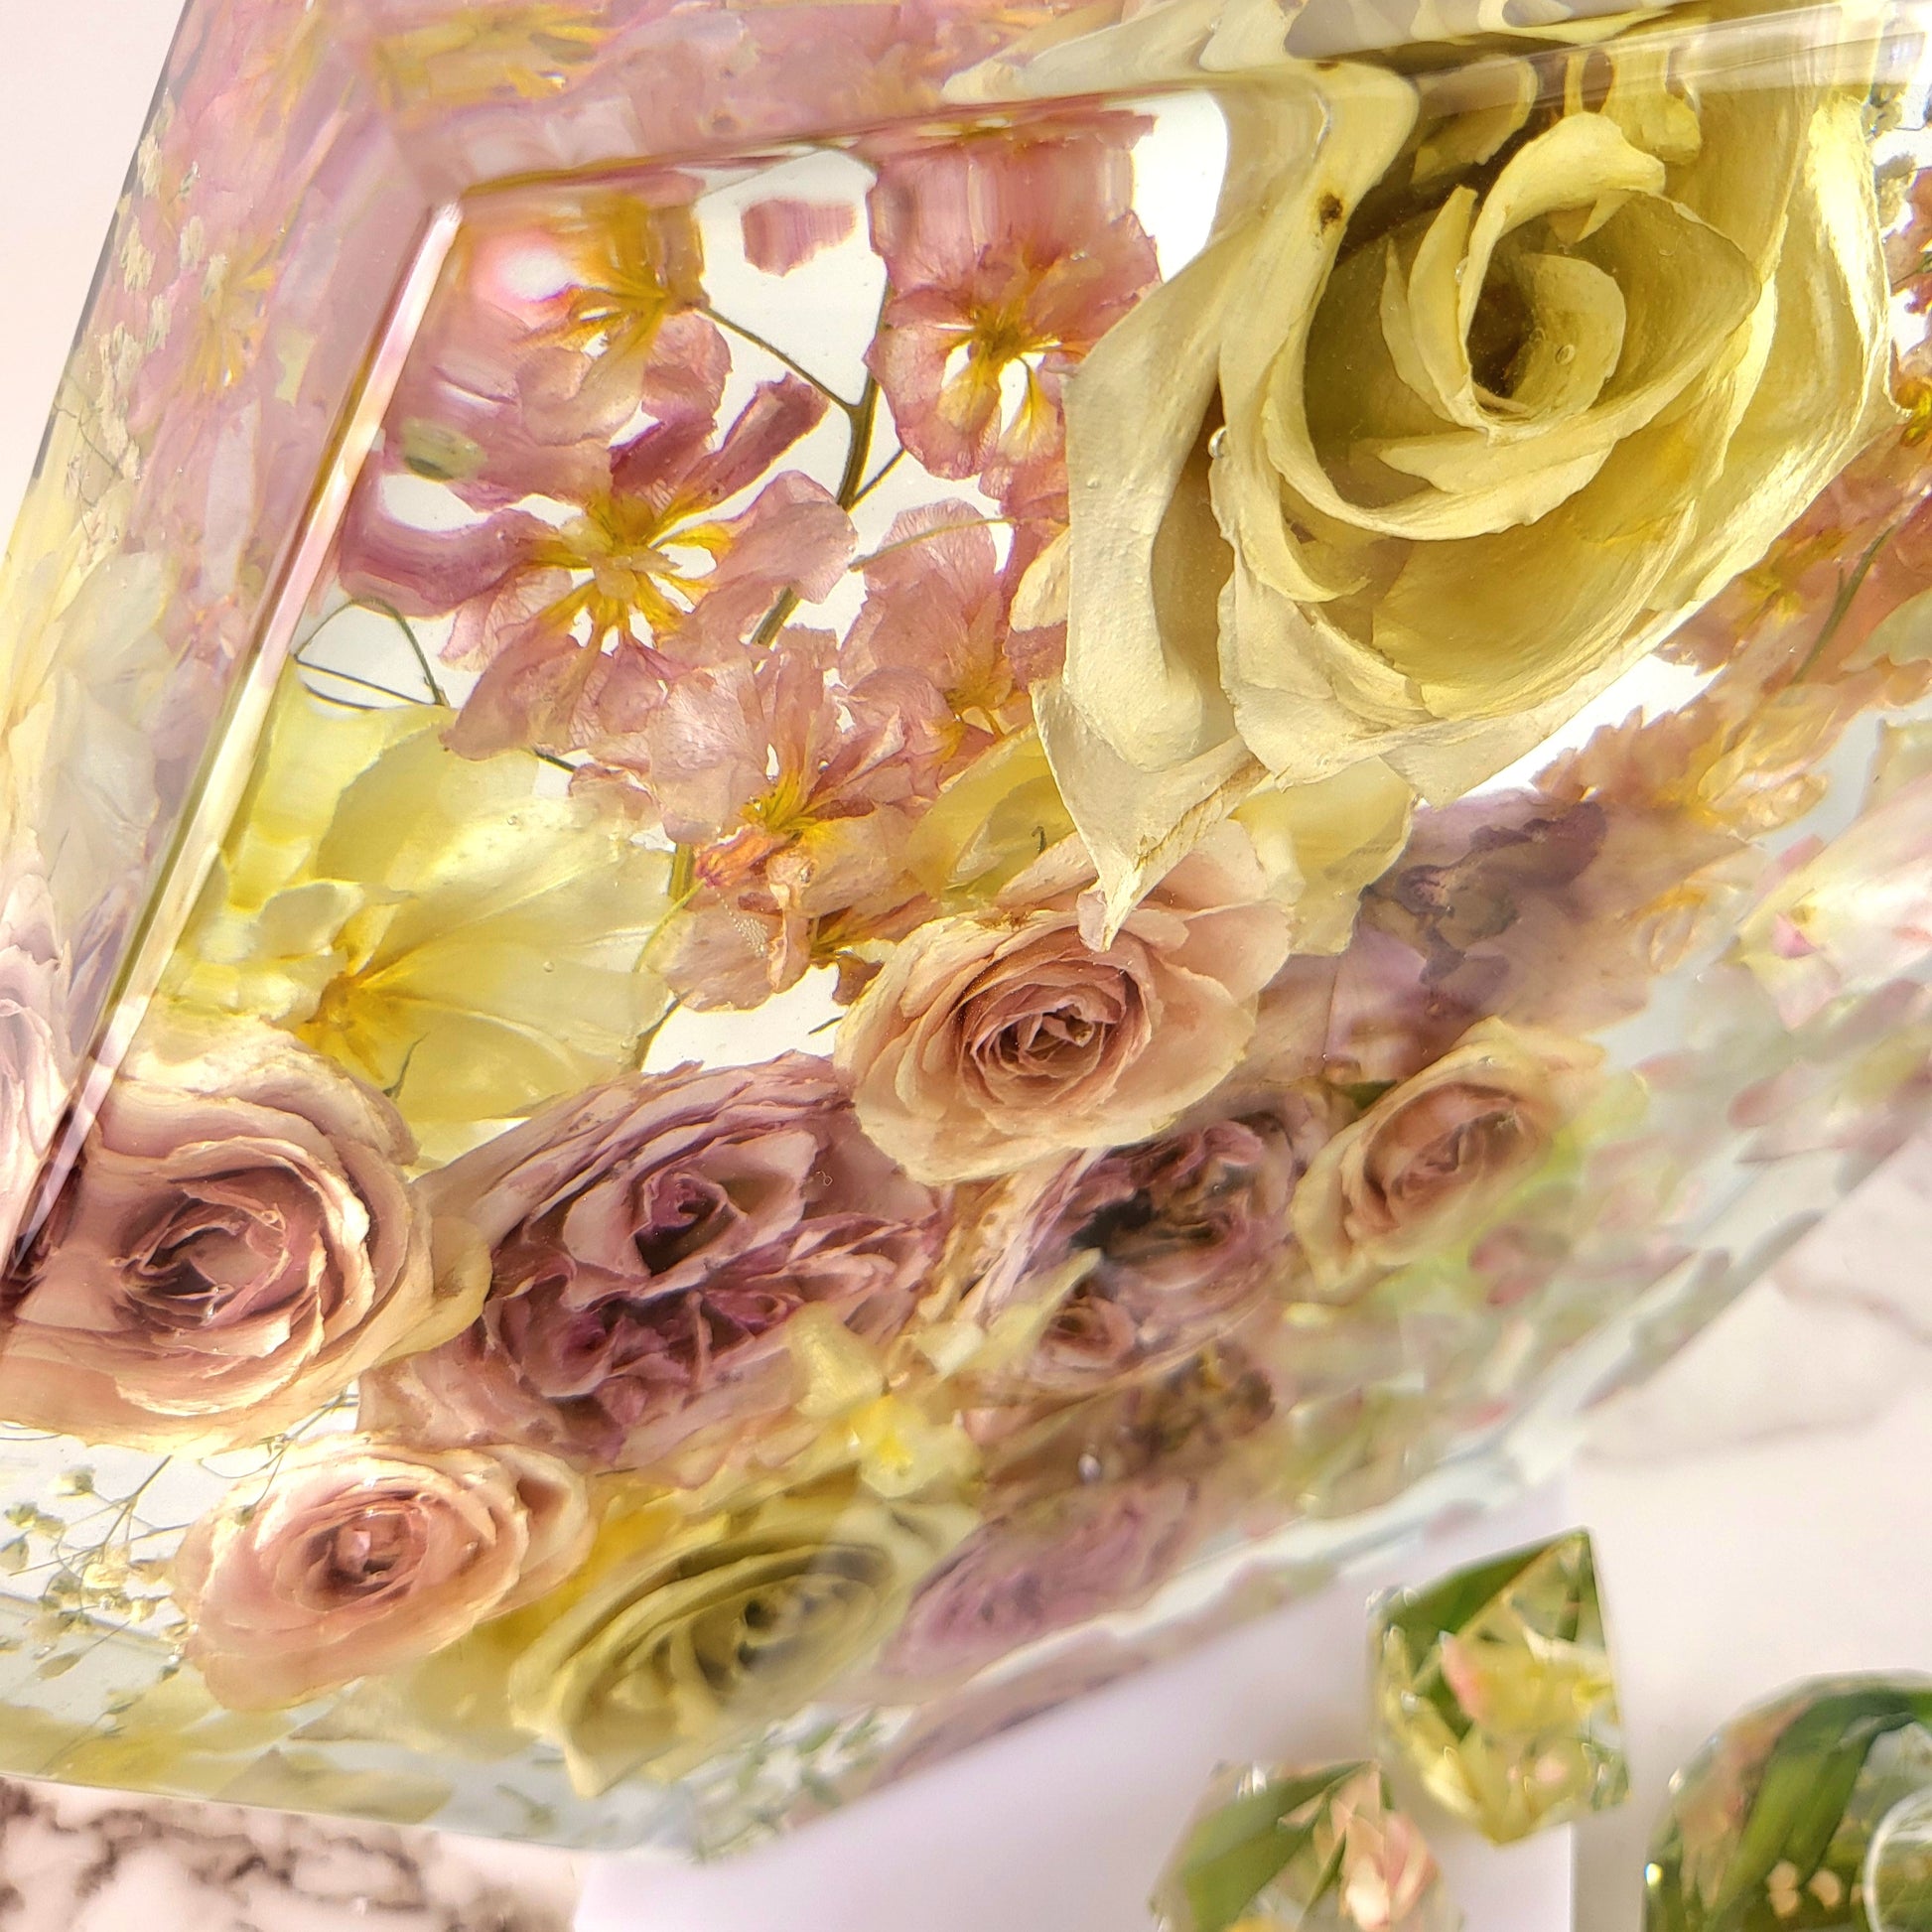 Large Pink Bohemian 12" Hexagon 3D Resin Wedding Bouquet Preservation Keepsake Gift Save Your Wedding Flowers Forever - flofloflowery